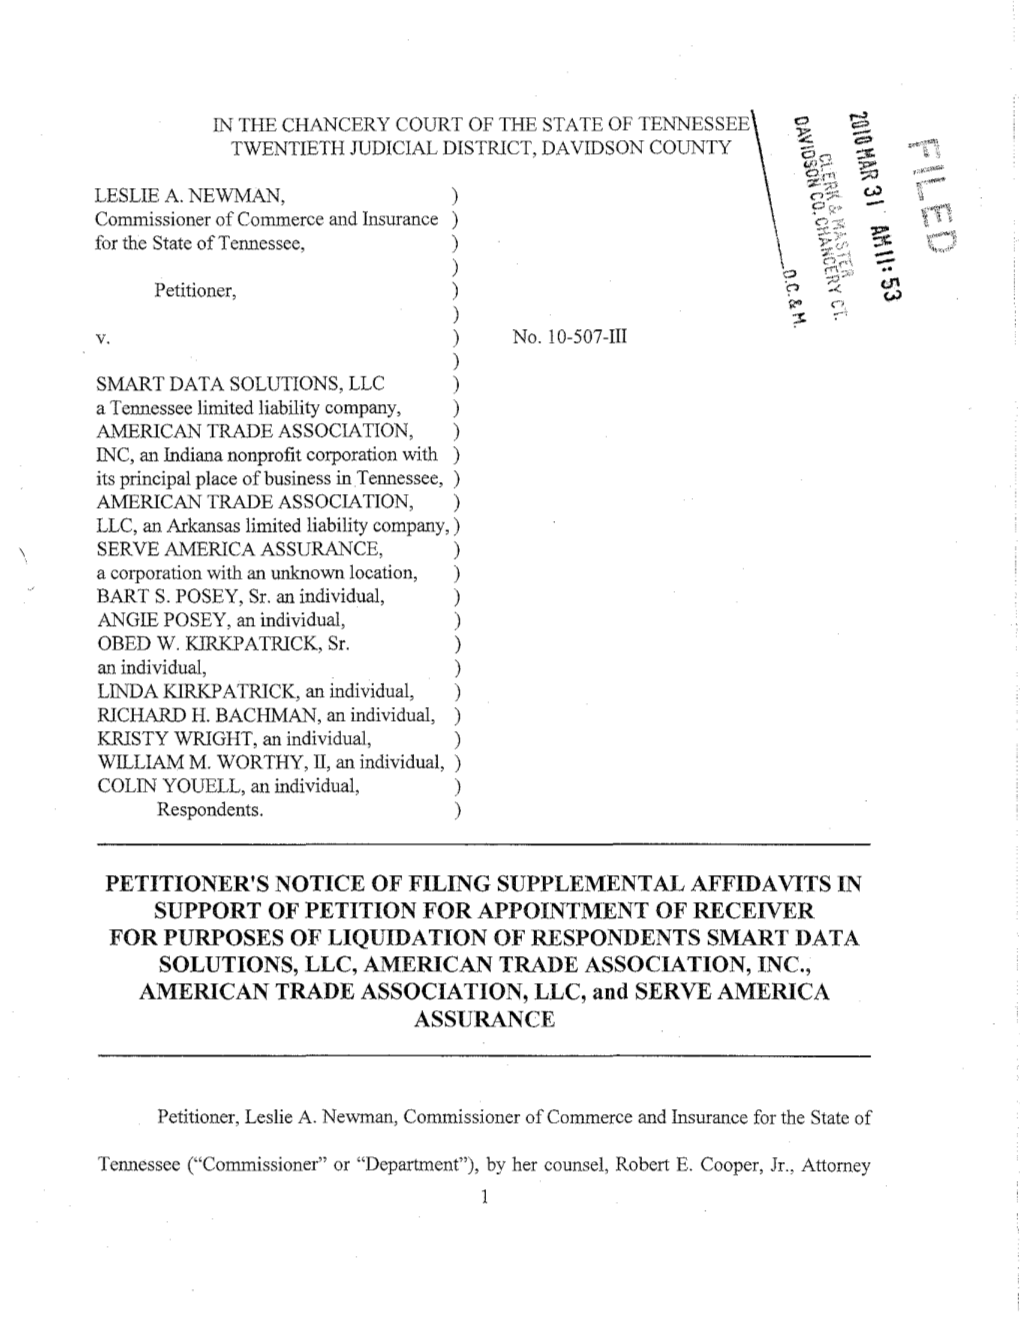 Petitioner's Notice of Filing Supplemental Affidavits In